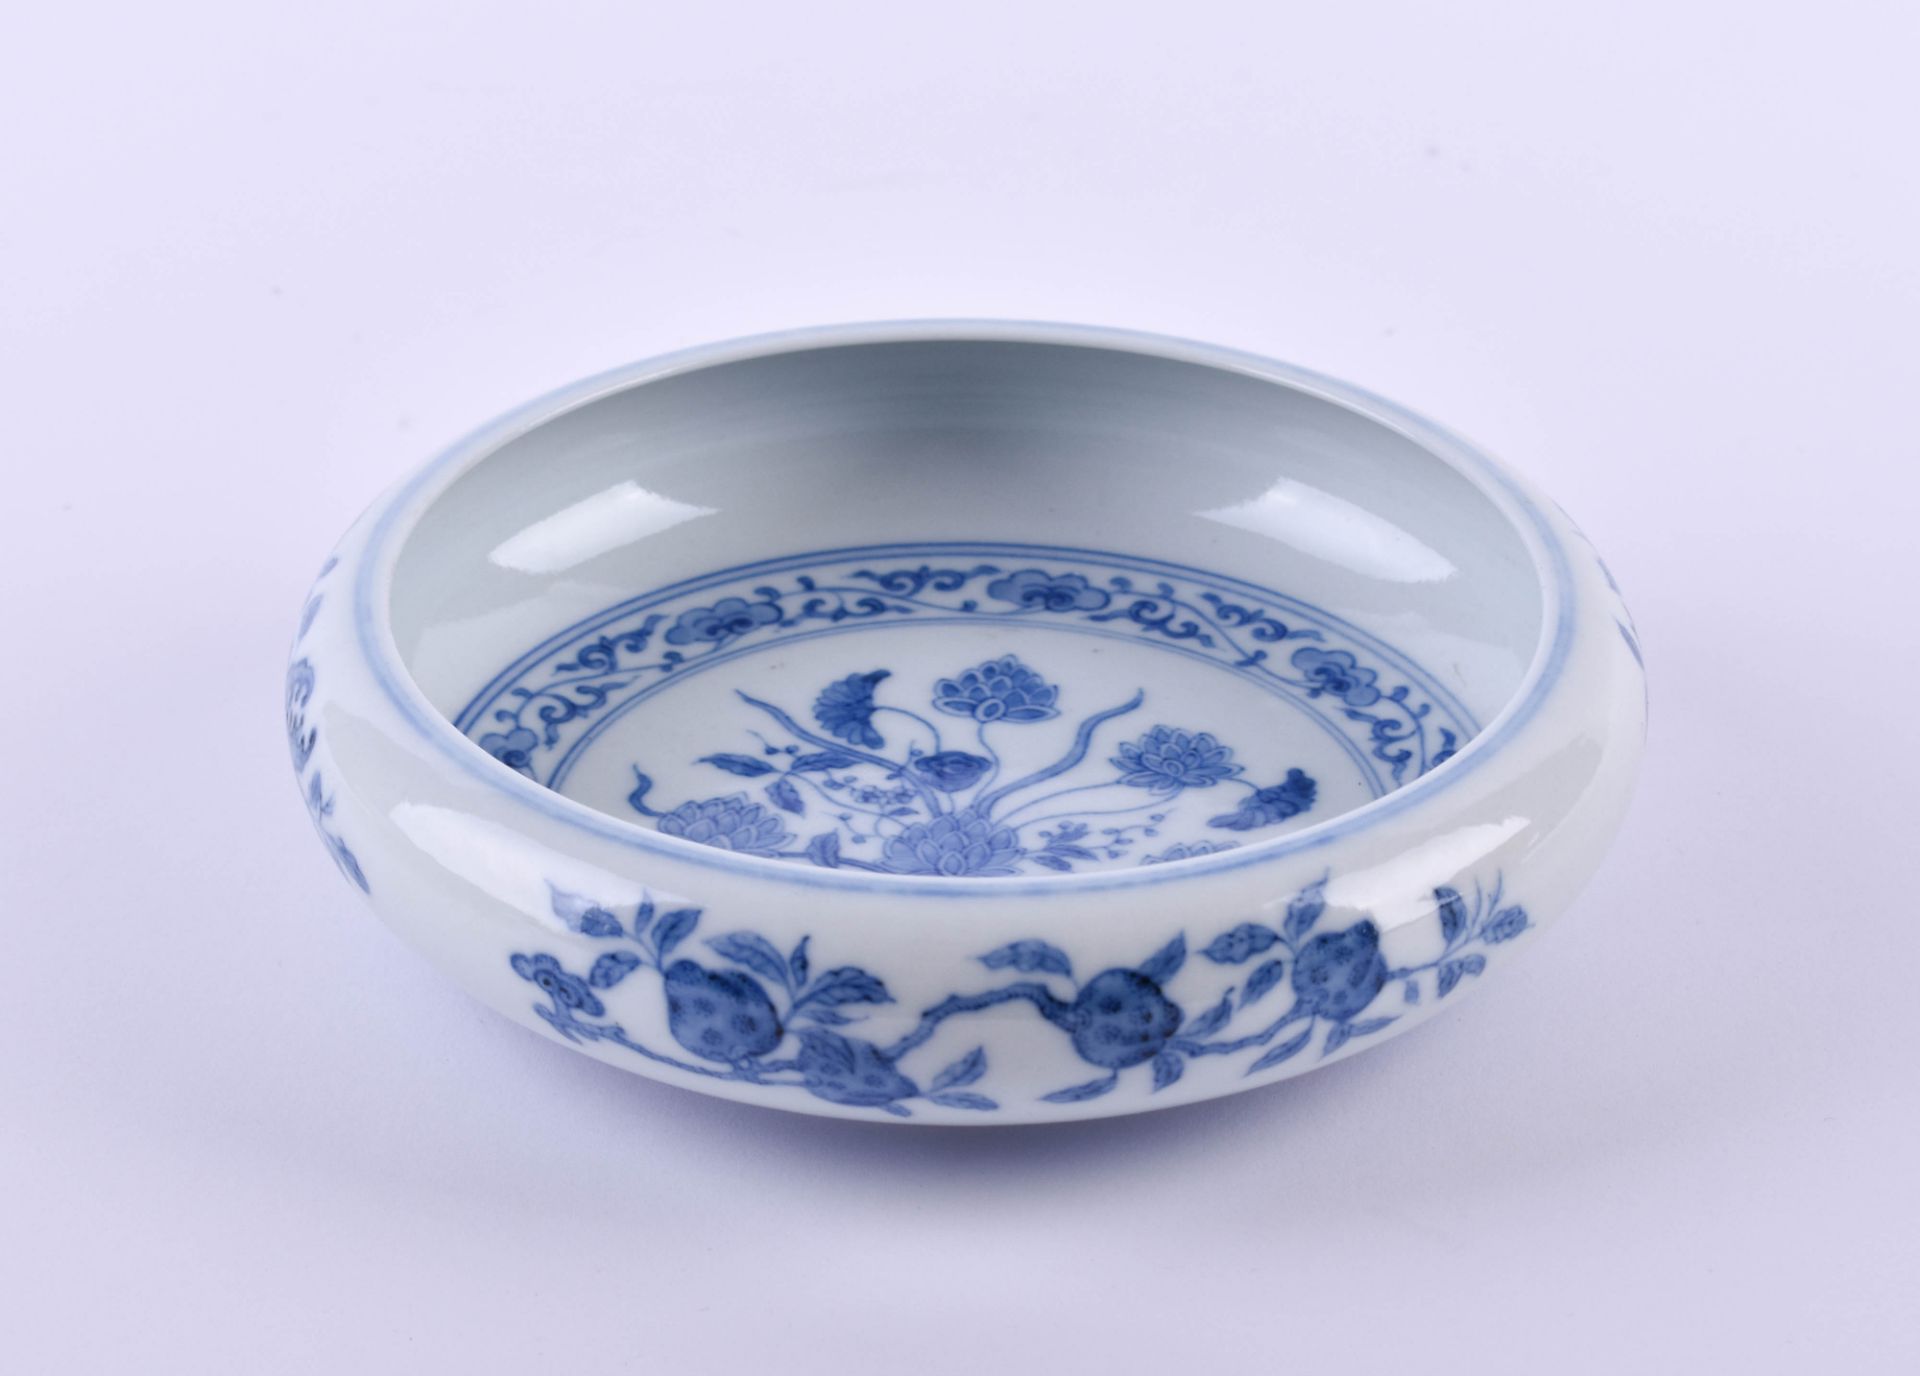  Bowl China Qing dynasty